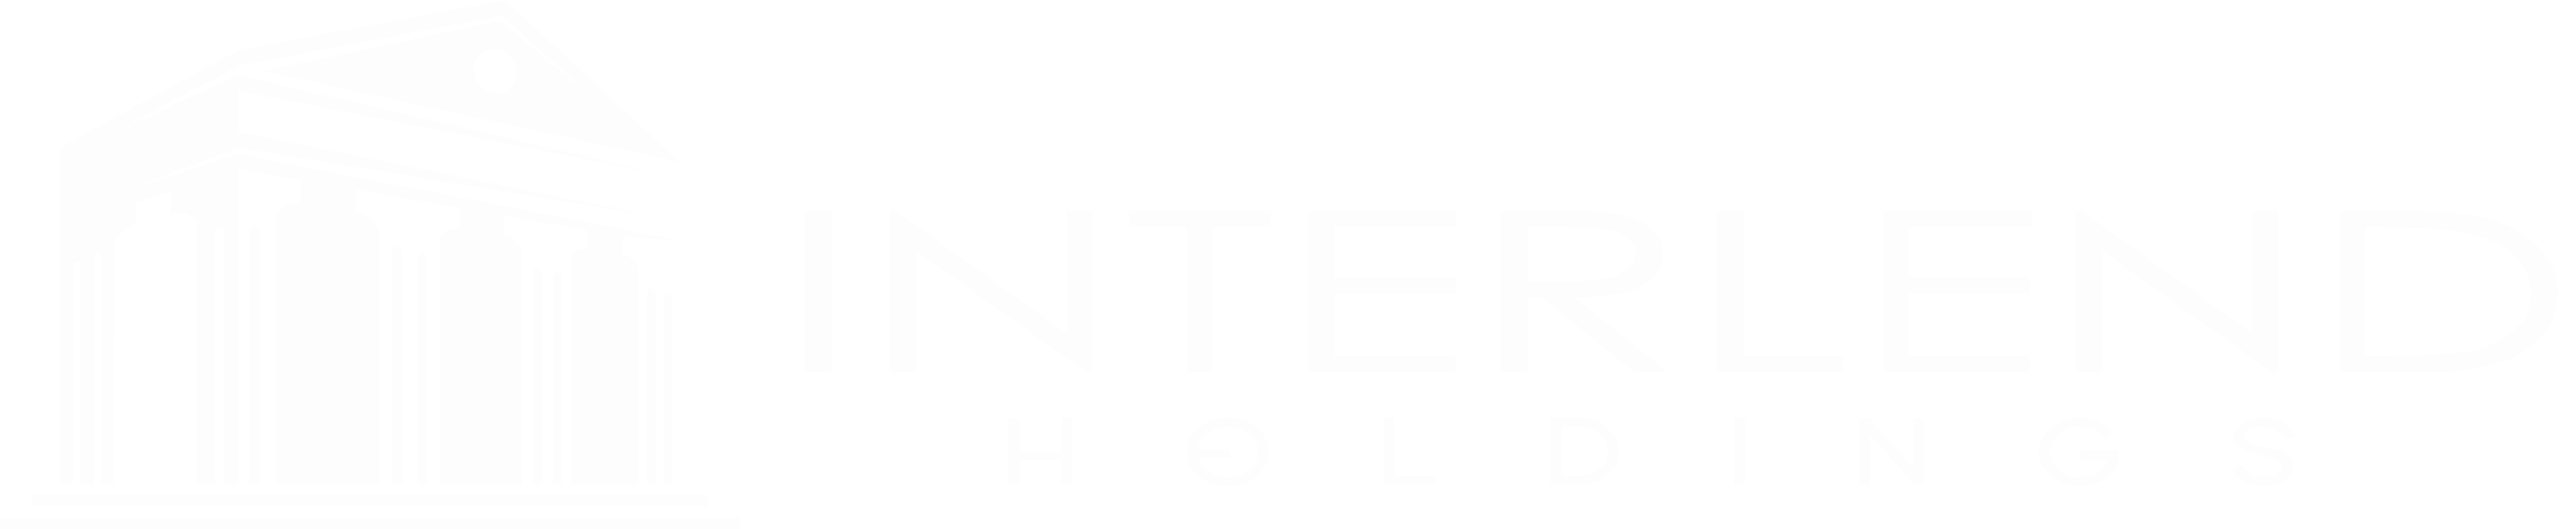 Interlend Holdings